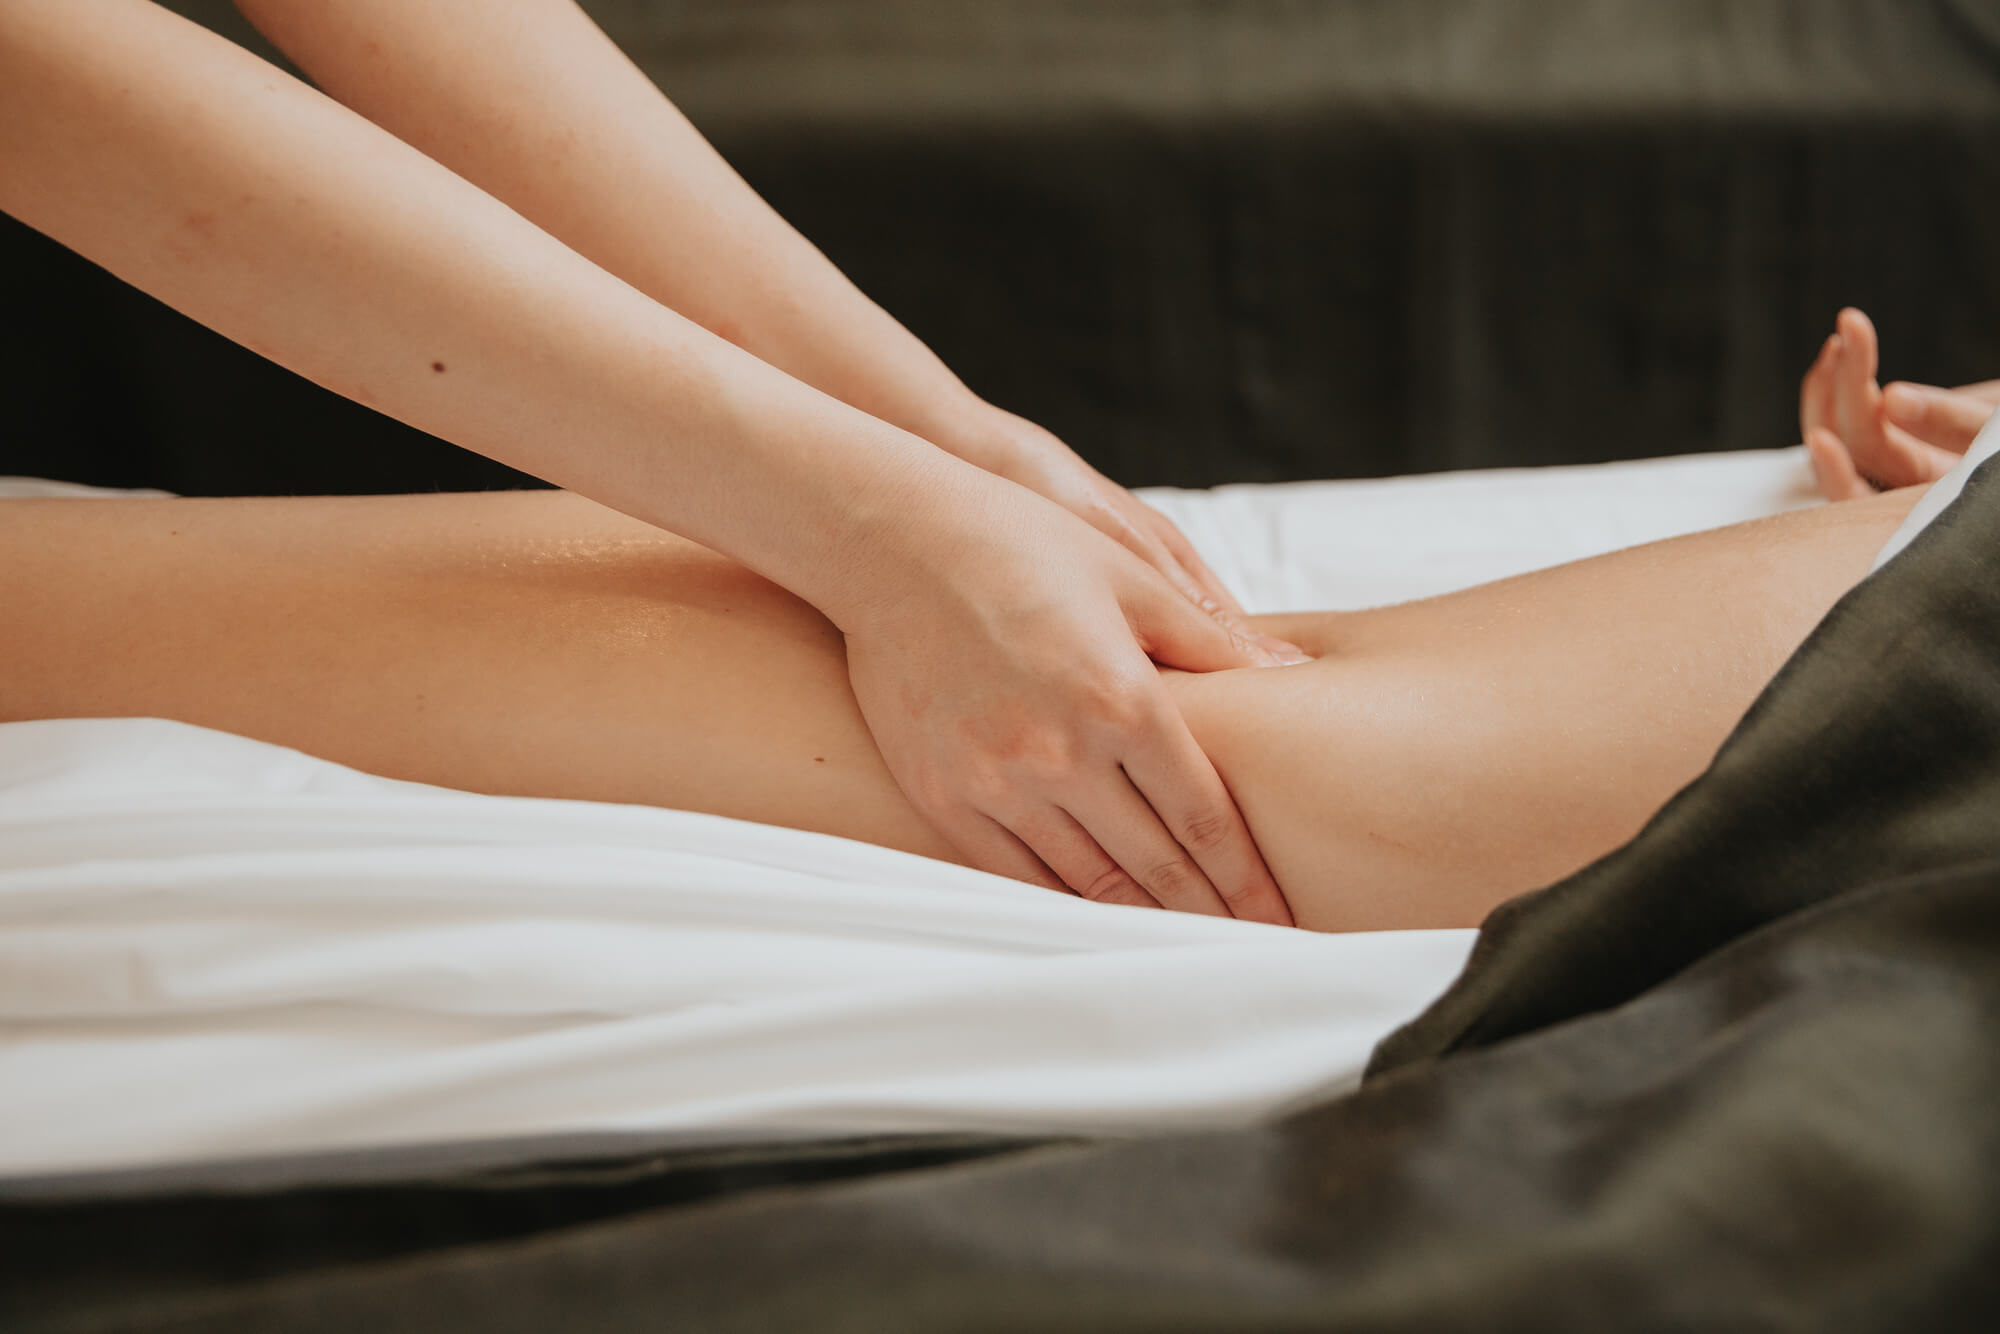 Massage therapist massaging a woman's calf